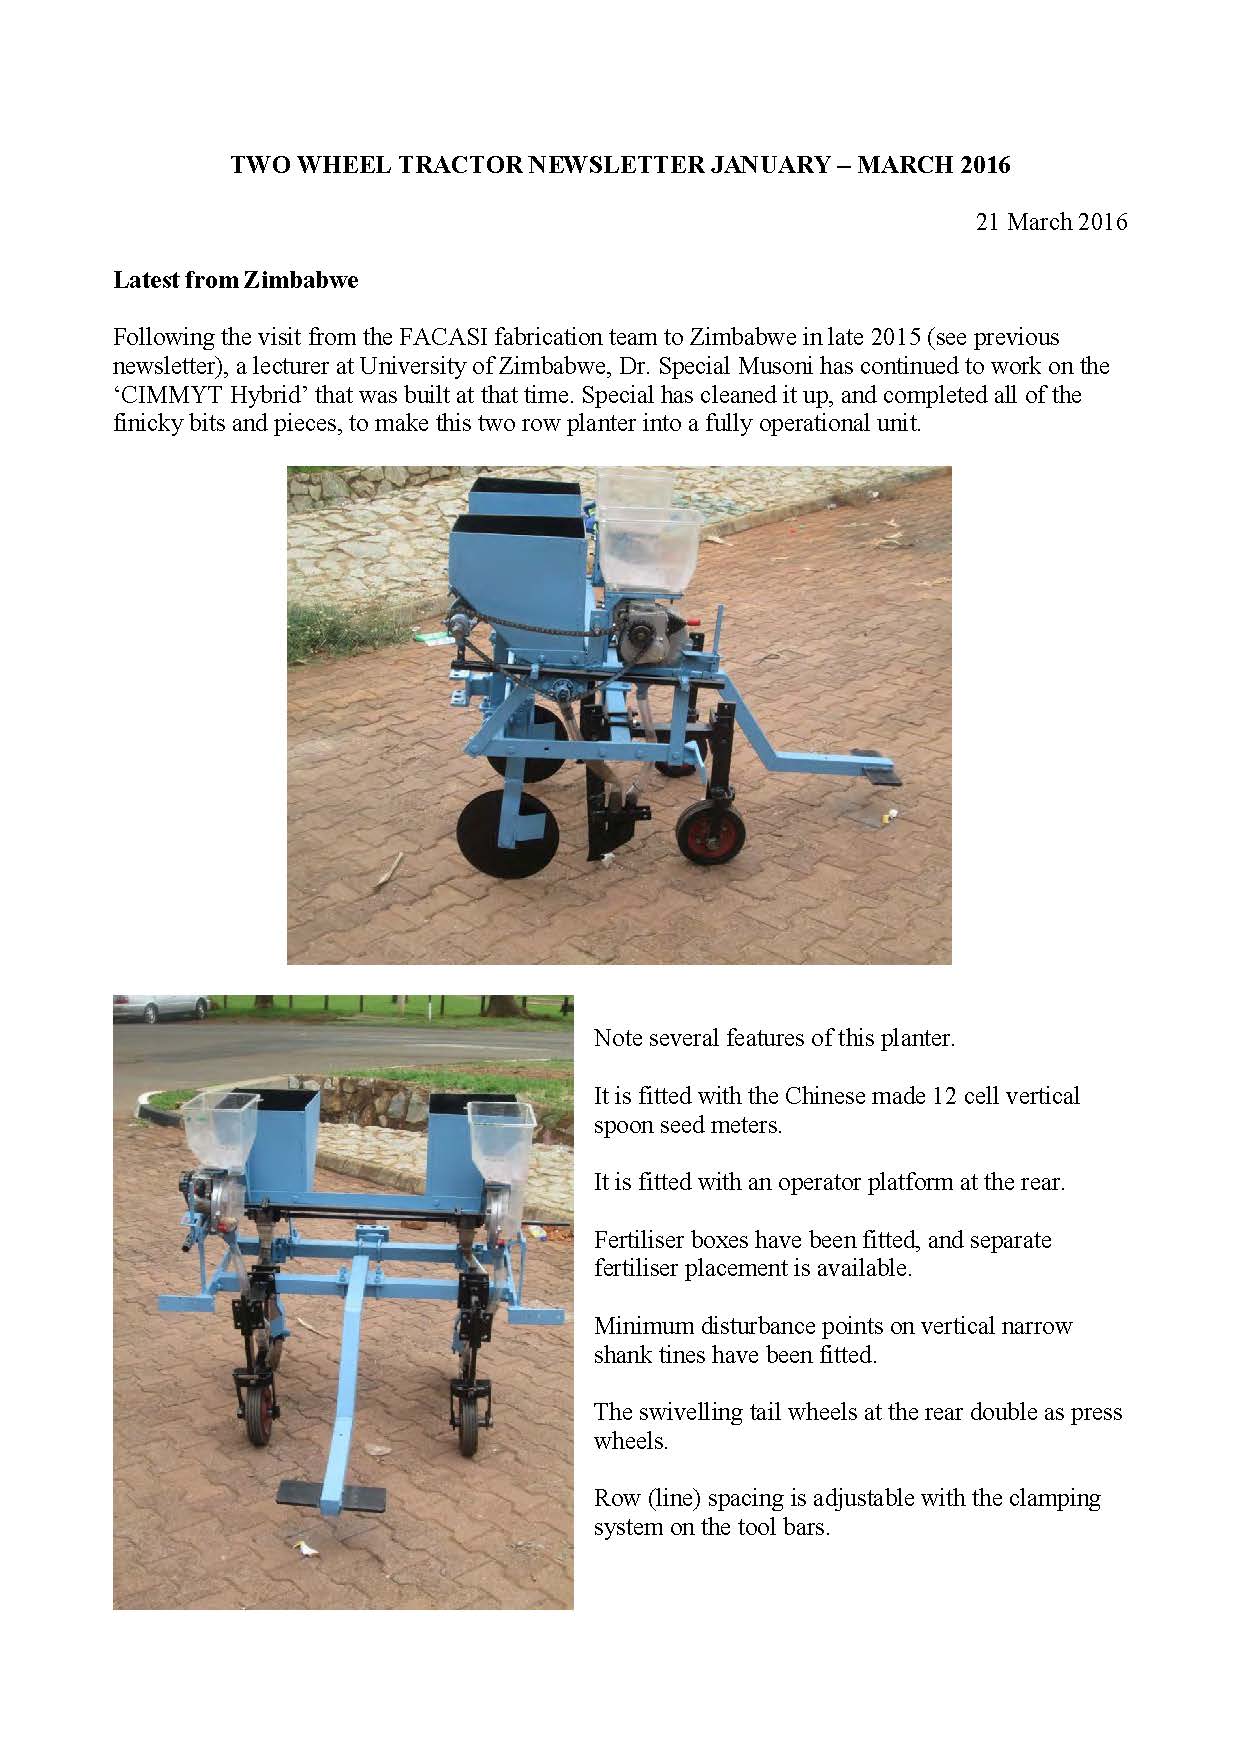 Jan March 2016 Two Wheel Tractor Newsletter